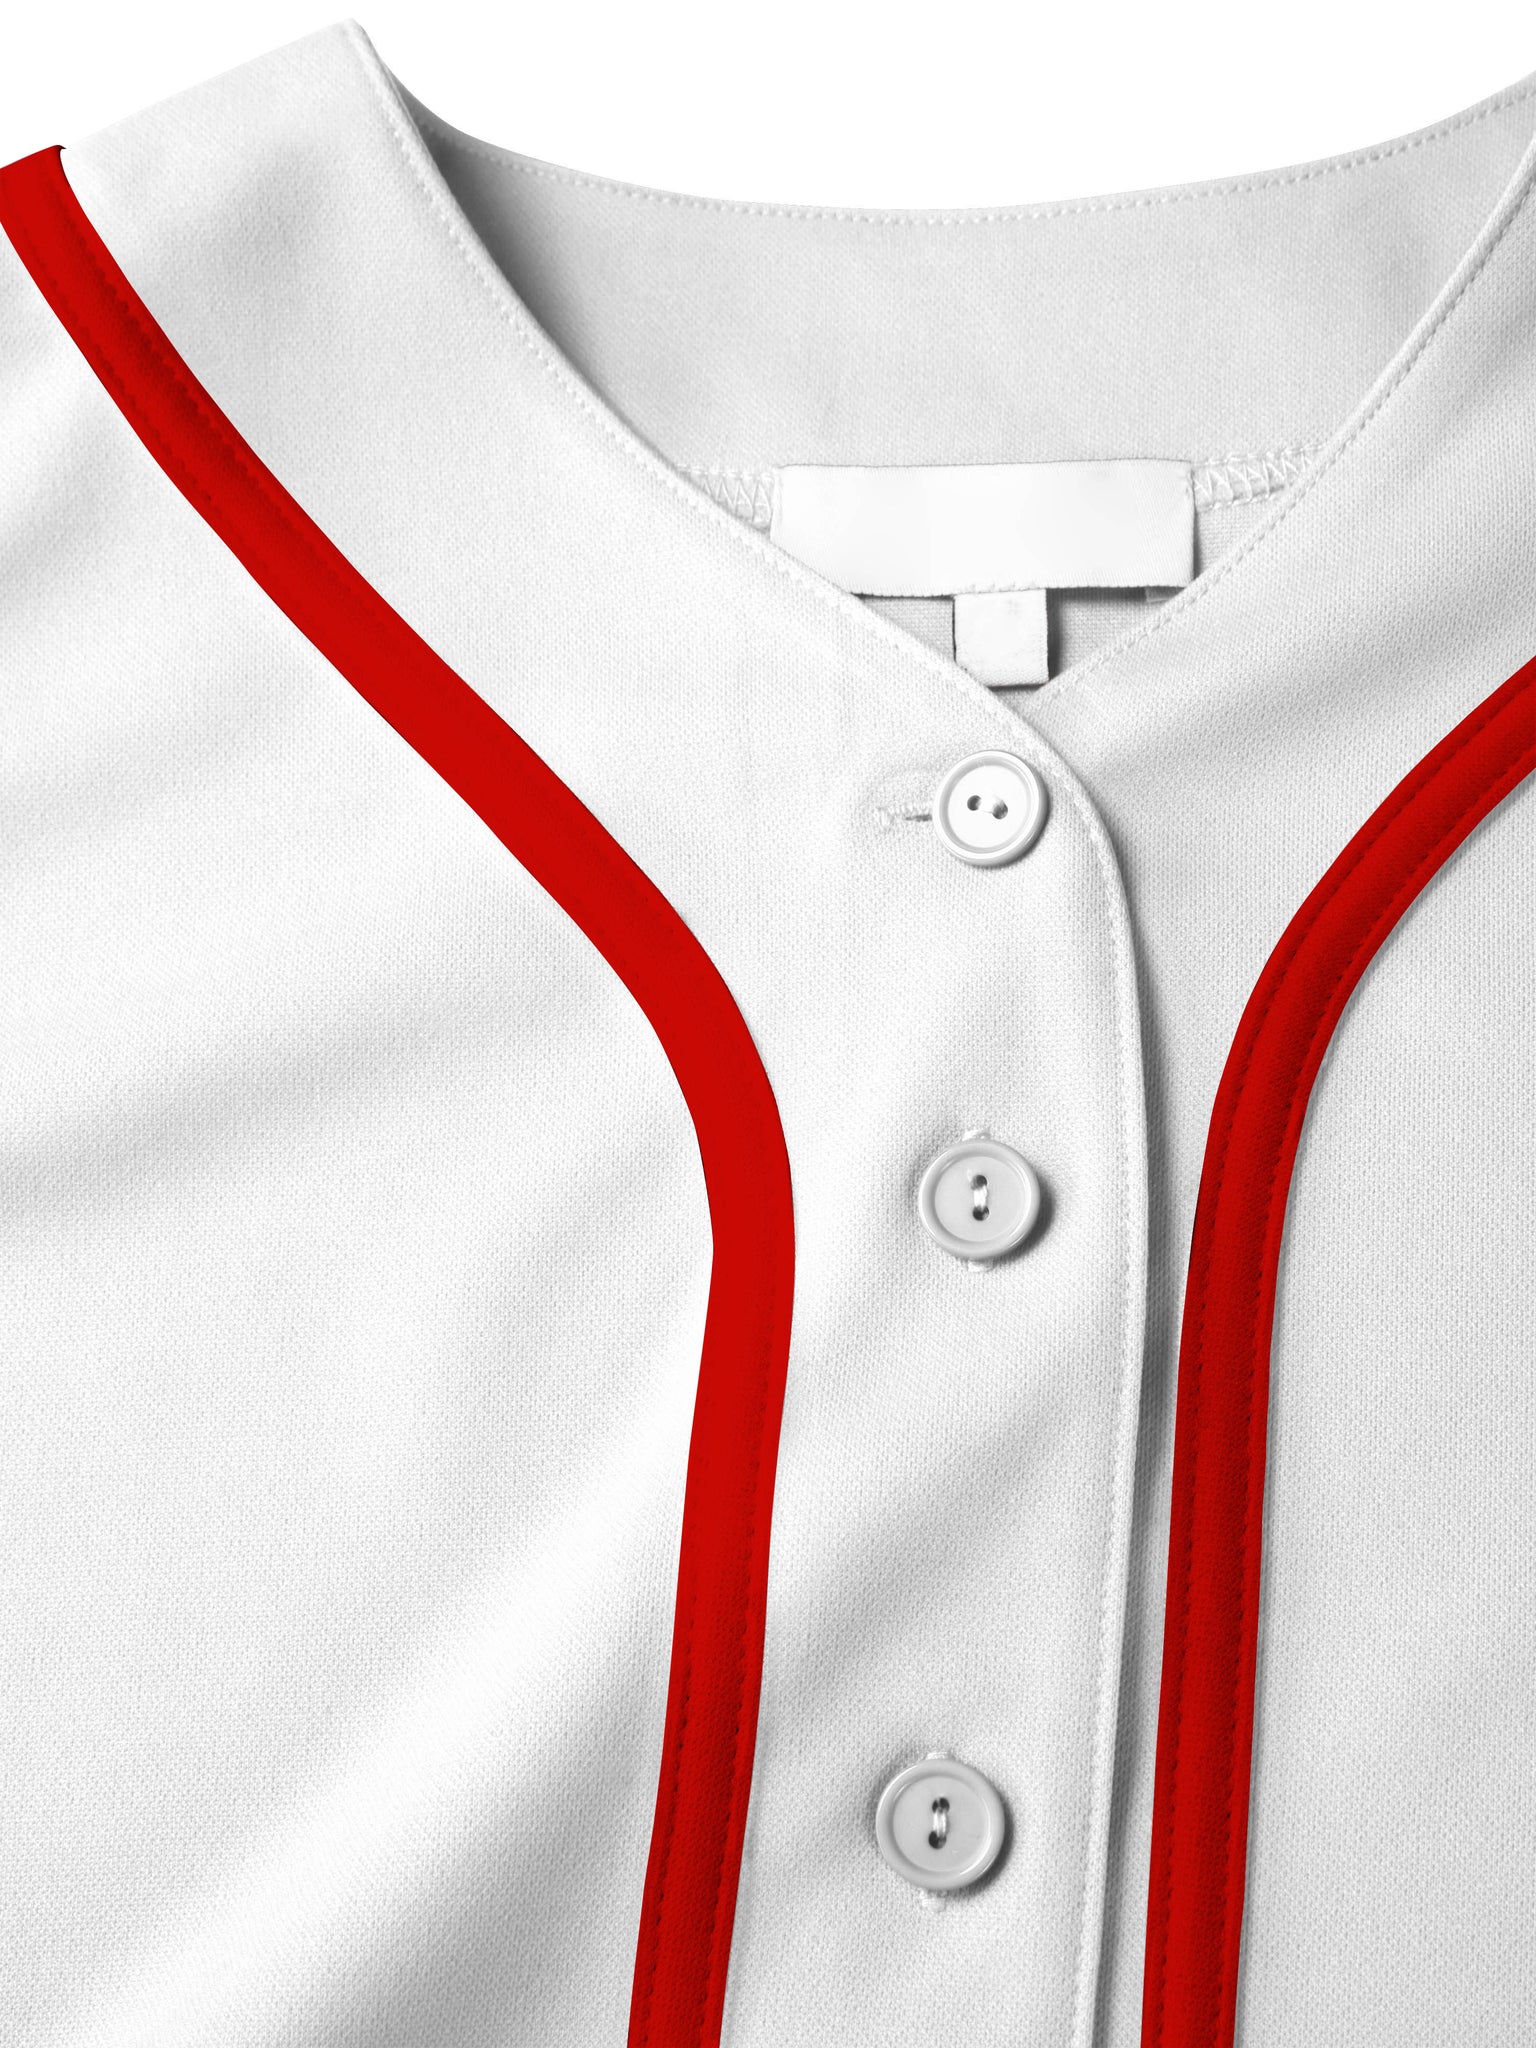 Women's Baseball Striped Button Down Jersey